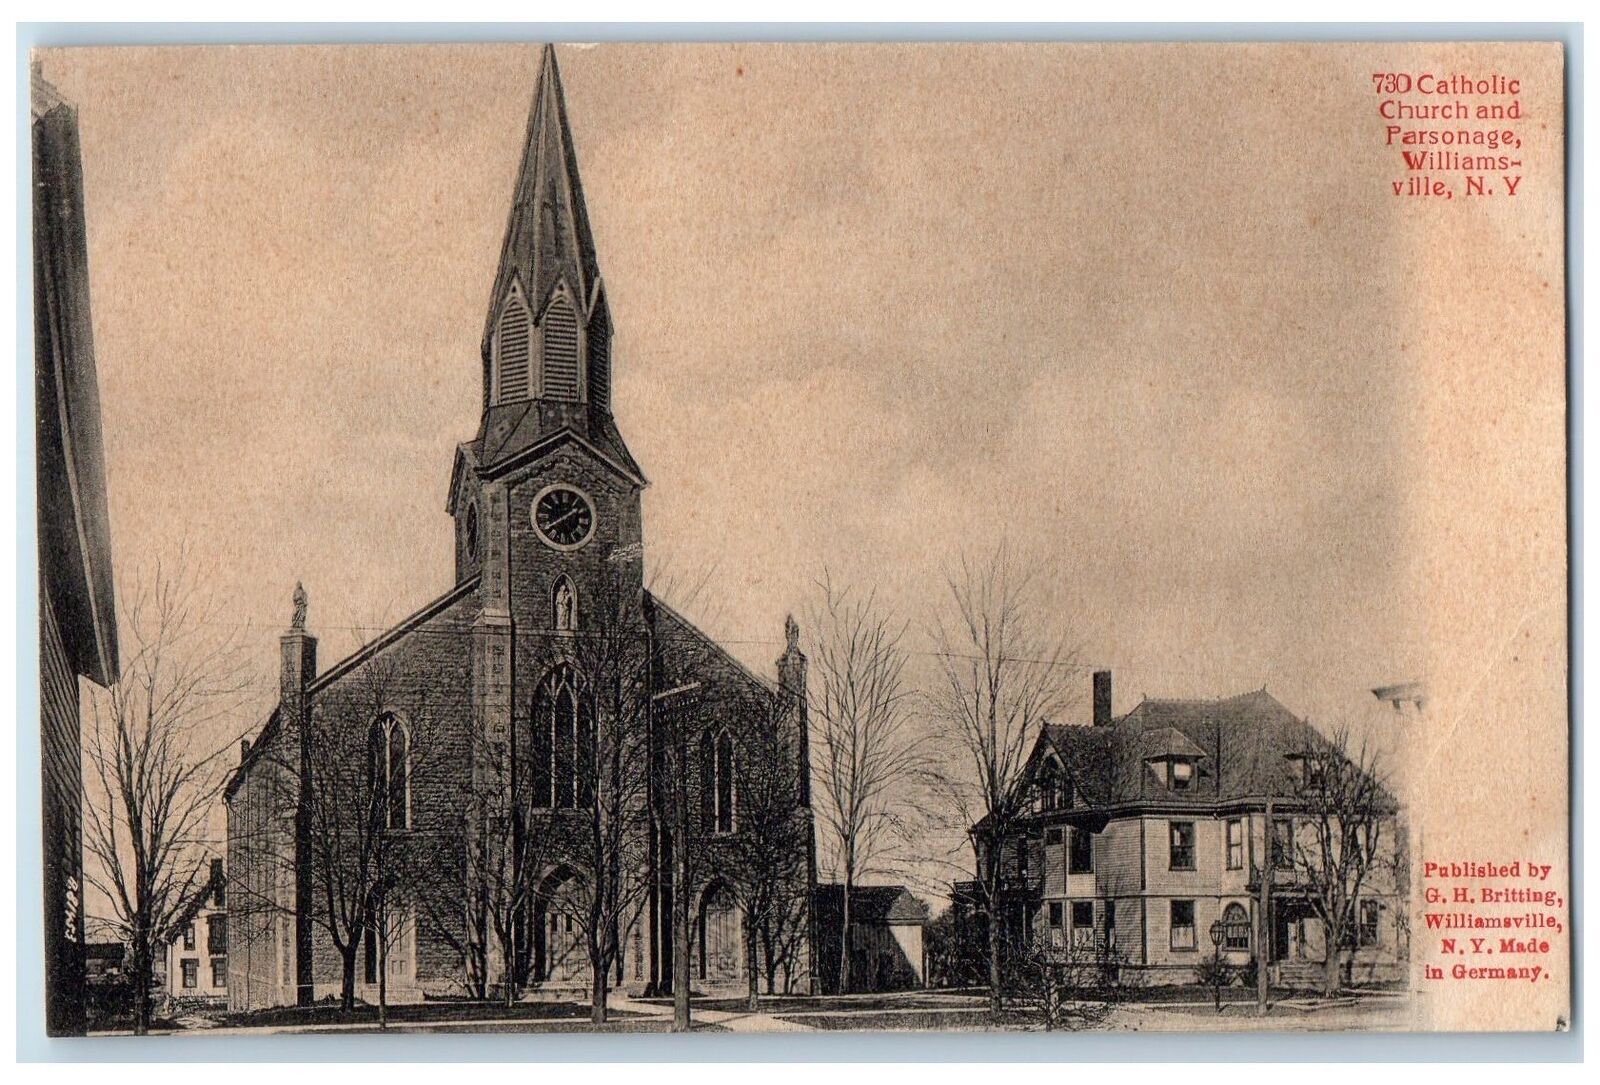 c1910 Catholic Church Parsonage House Williamsville New York NY Antique Postcard